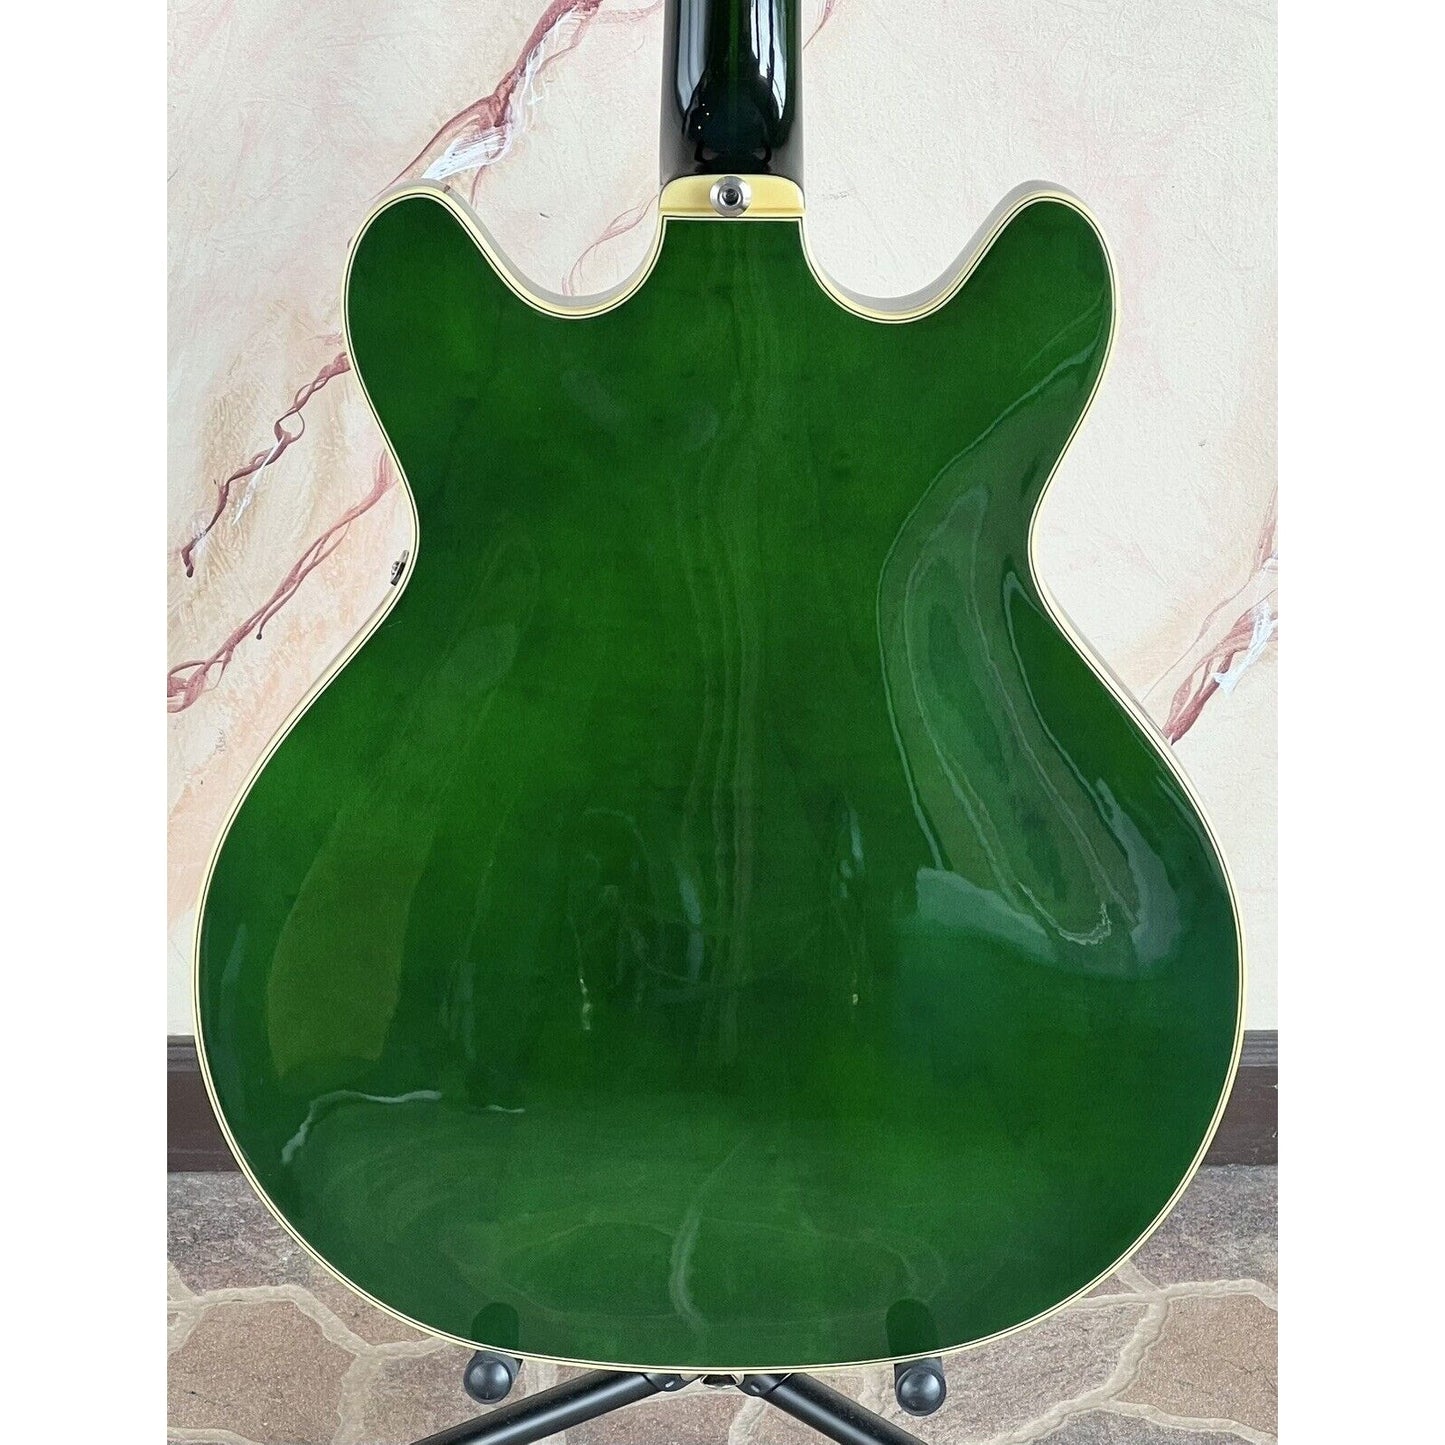 Guild Starfire SF IV ST Maple Semi Hollow Body Electric Guitar - Emerald Green